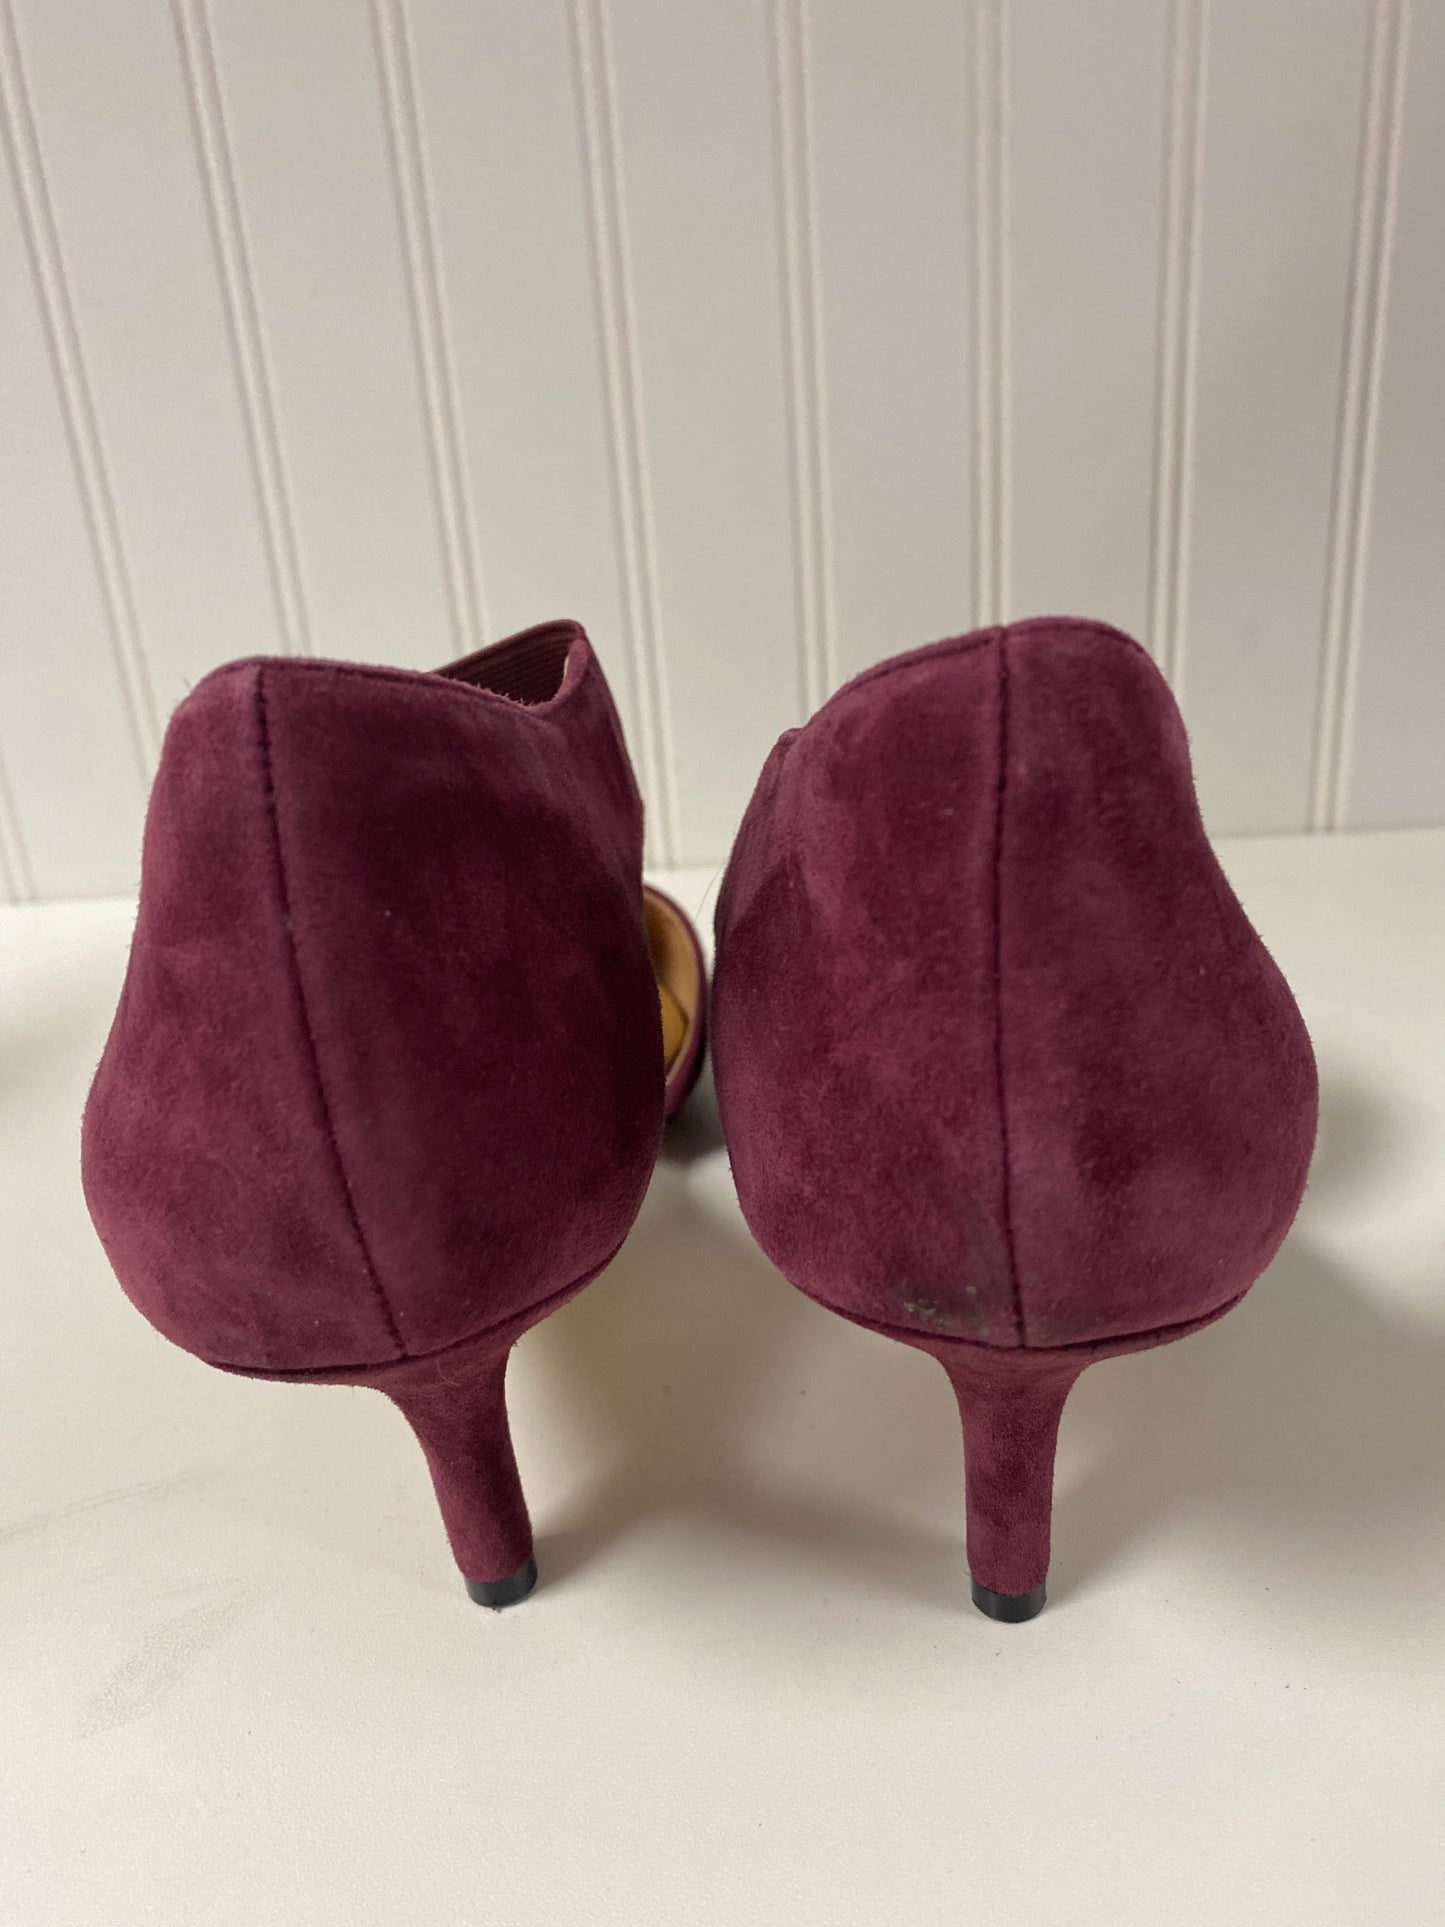 Purple Shoes Heels Stiletto Corso Como, Size 8.5